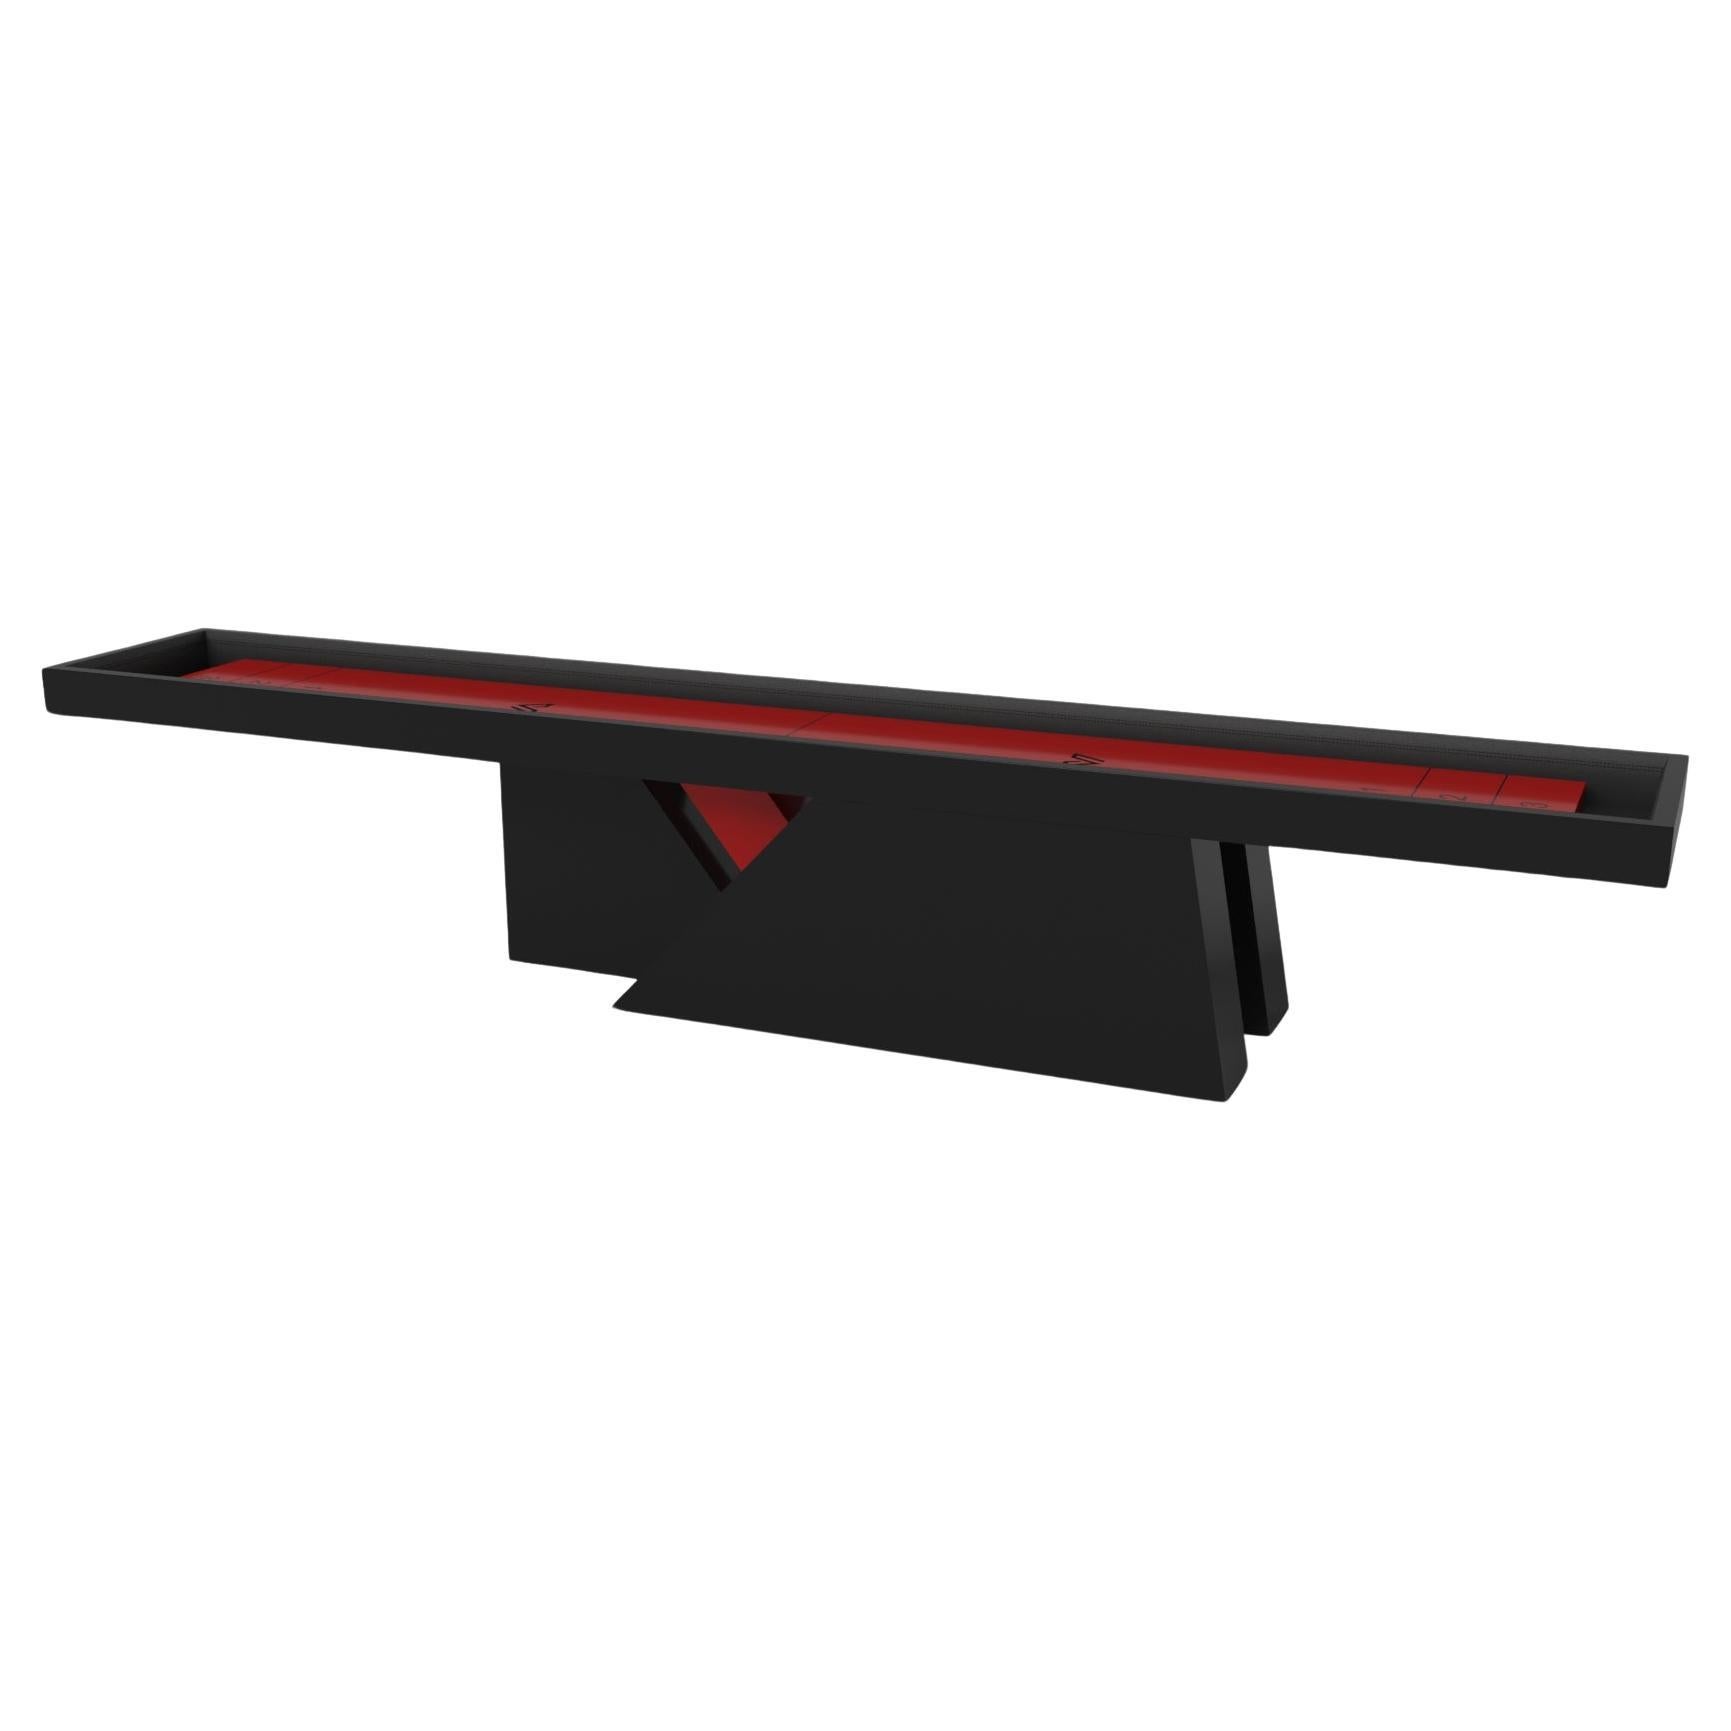 Elevate Customs tables Stilt Shuffleboard /Solid Pantone Black Color in 14' -USA